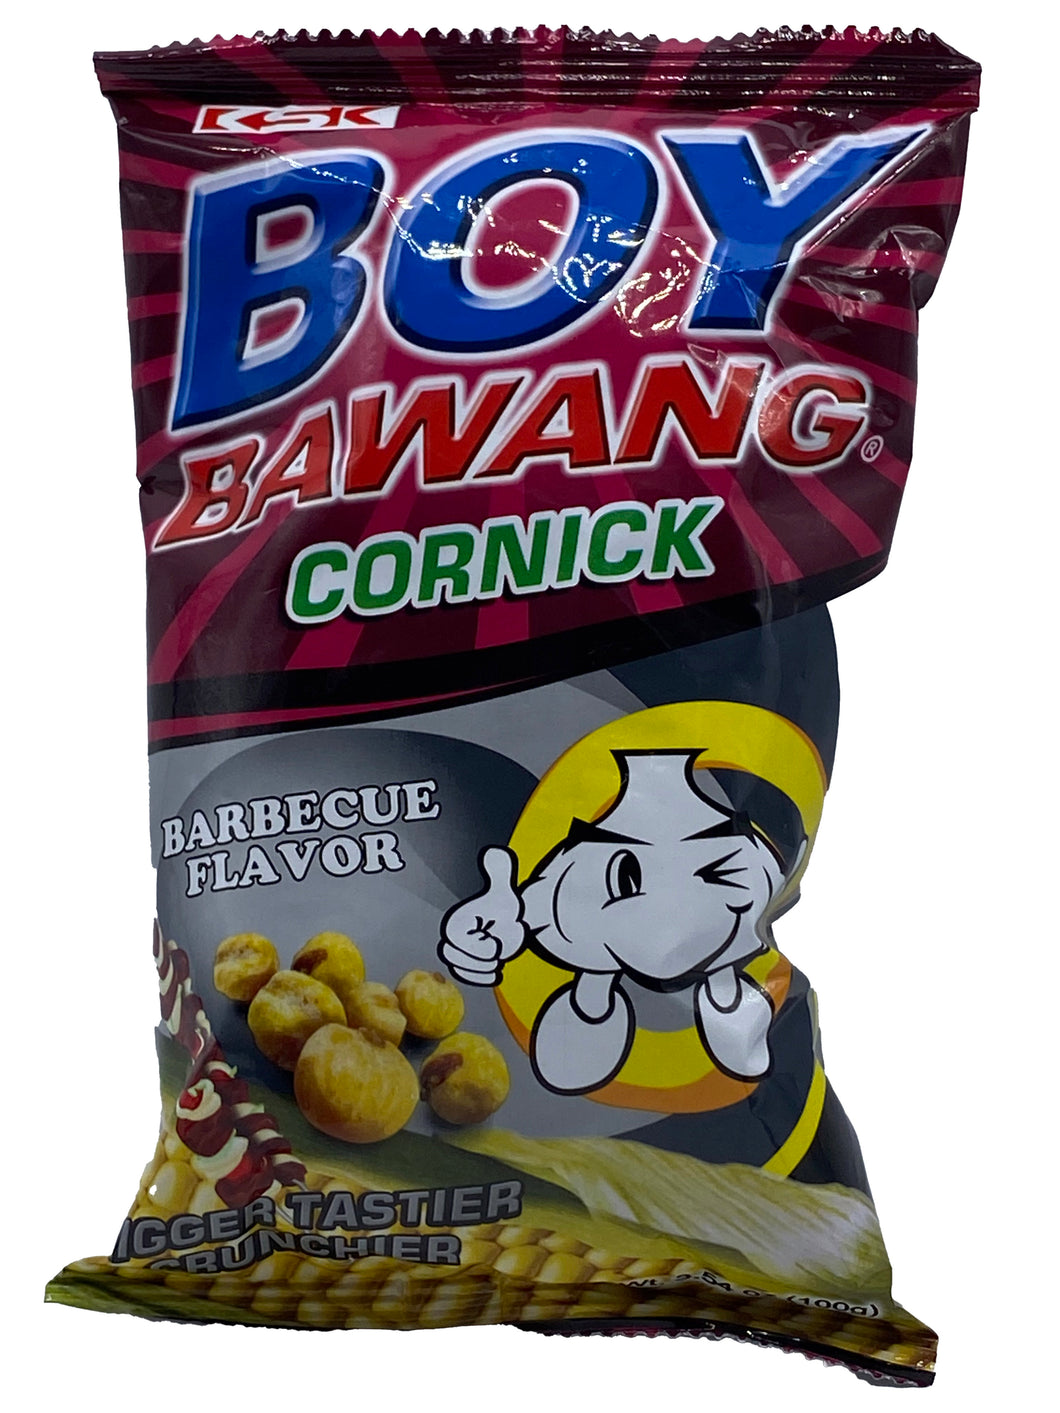 Boy Bawang Cornick- Barbecue Flavor